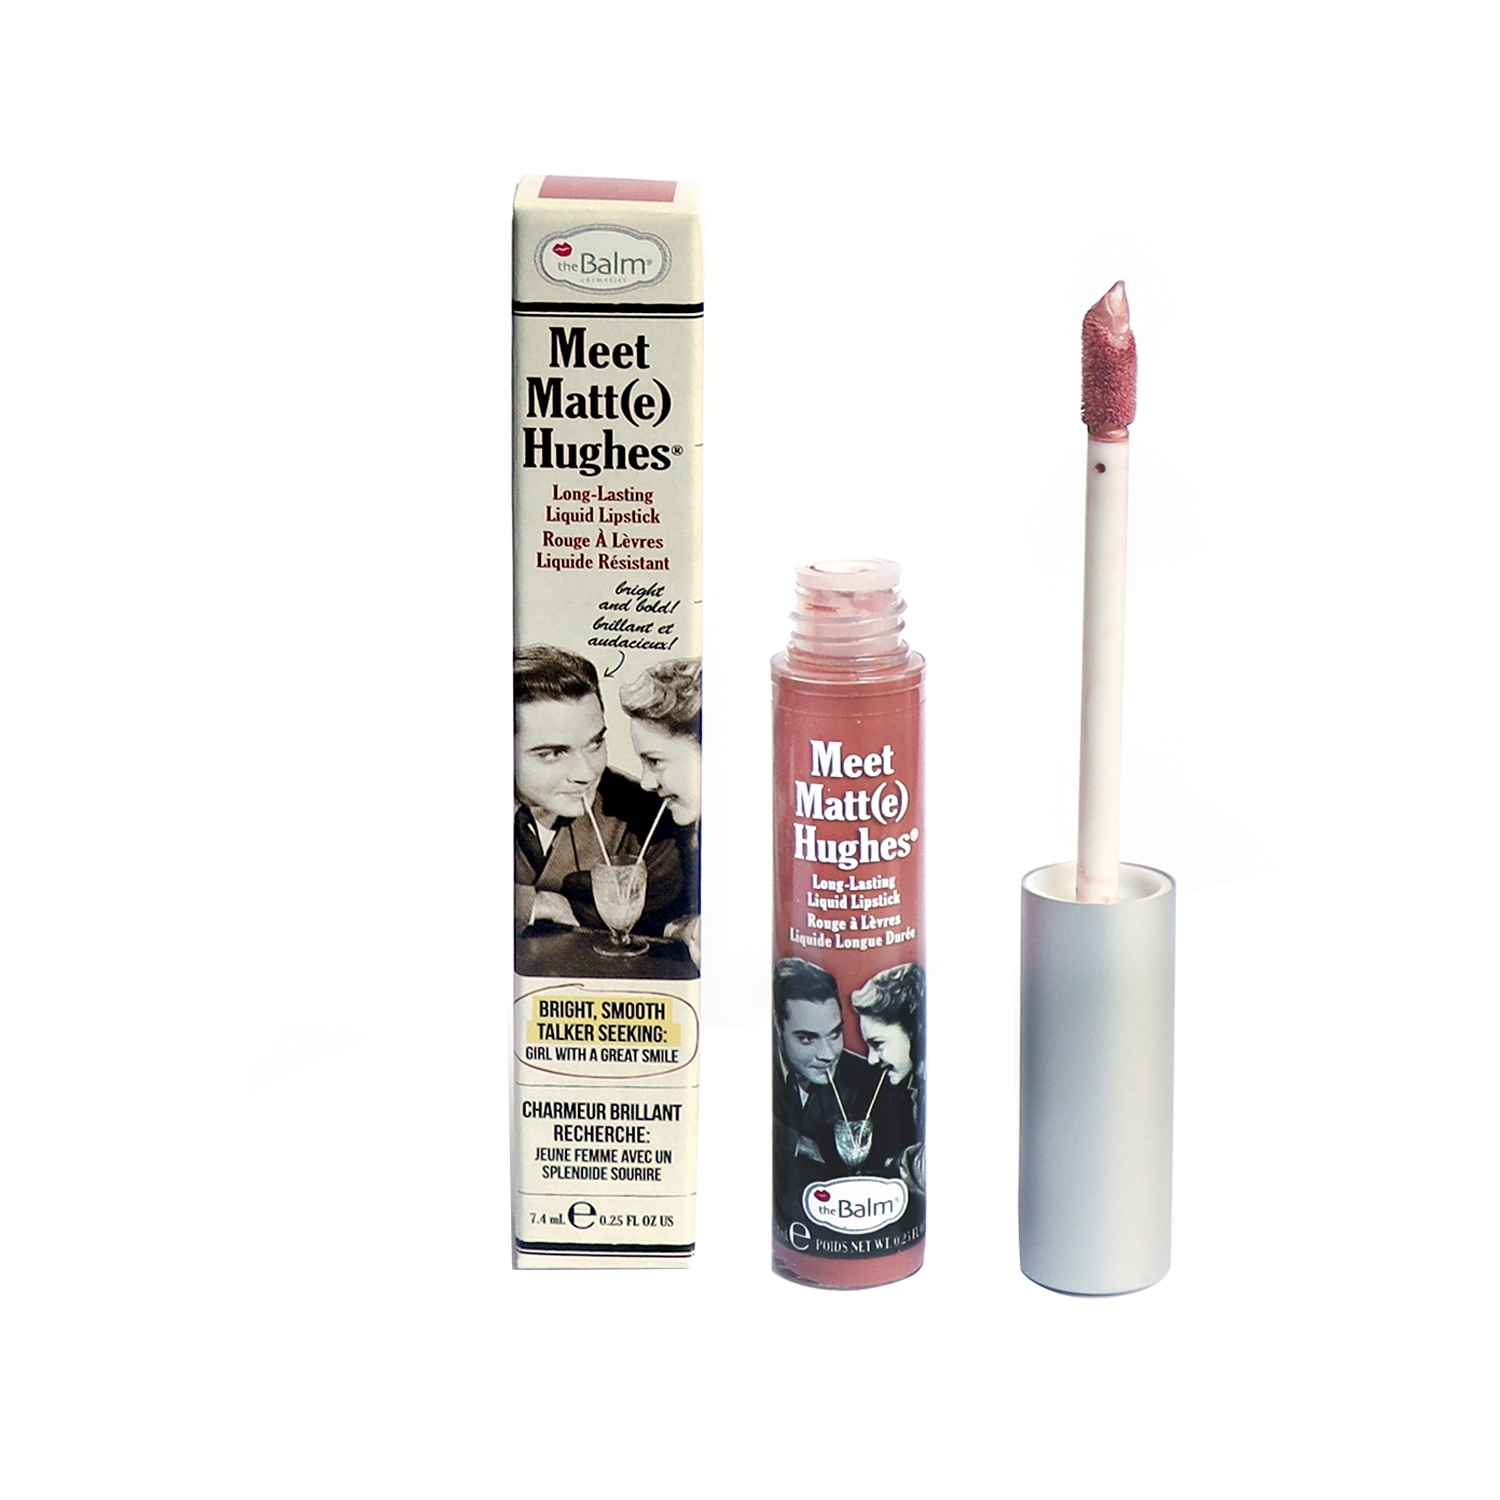 theBalm Cosmetics | theBalm Cosmetics Meet Matte Hughes Liquid Lipstick - Patient (7.4ml)